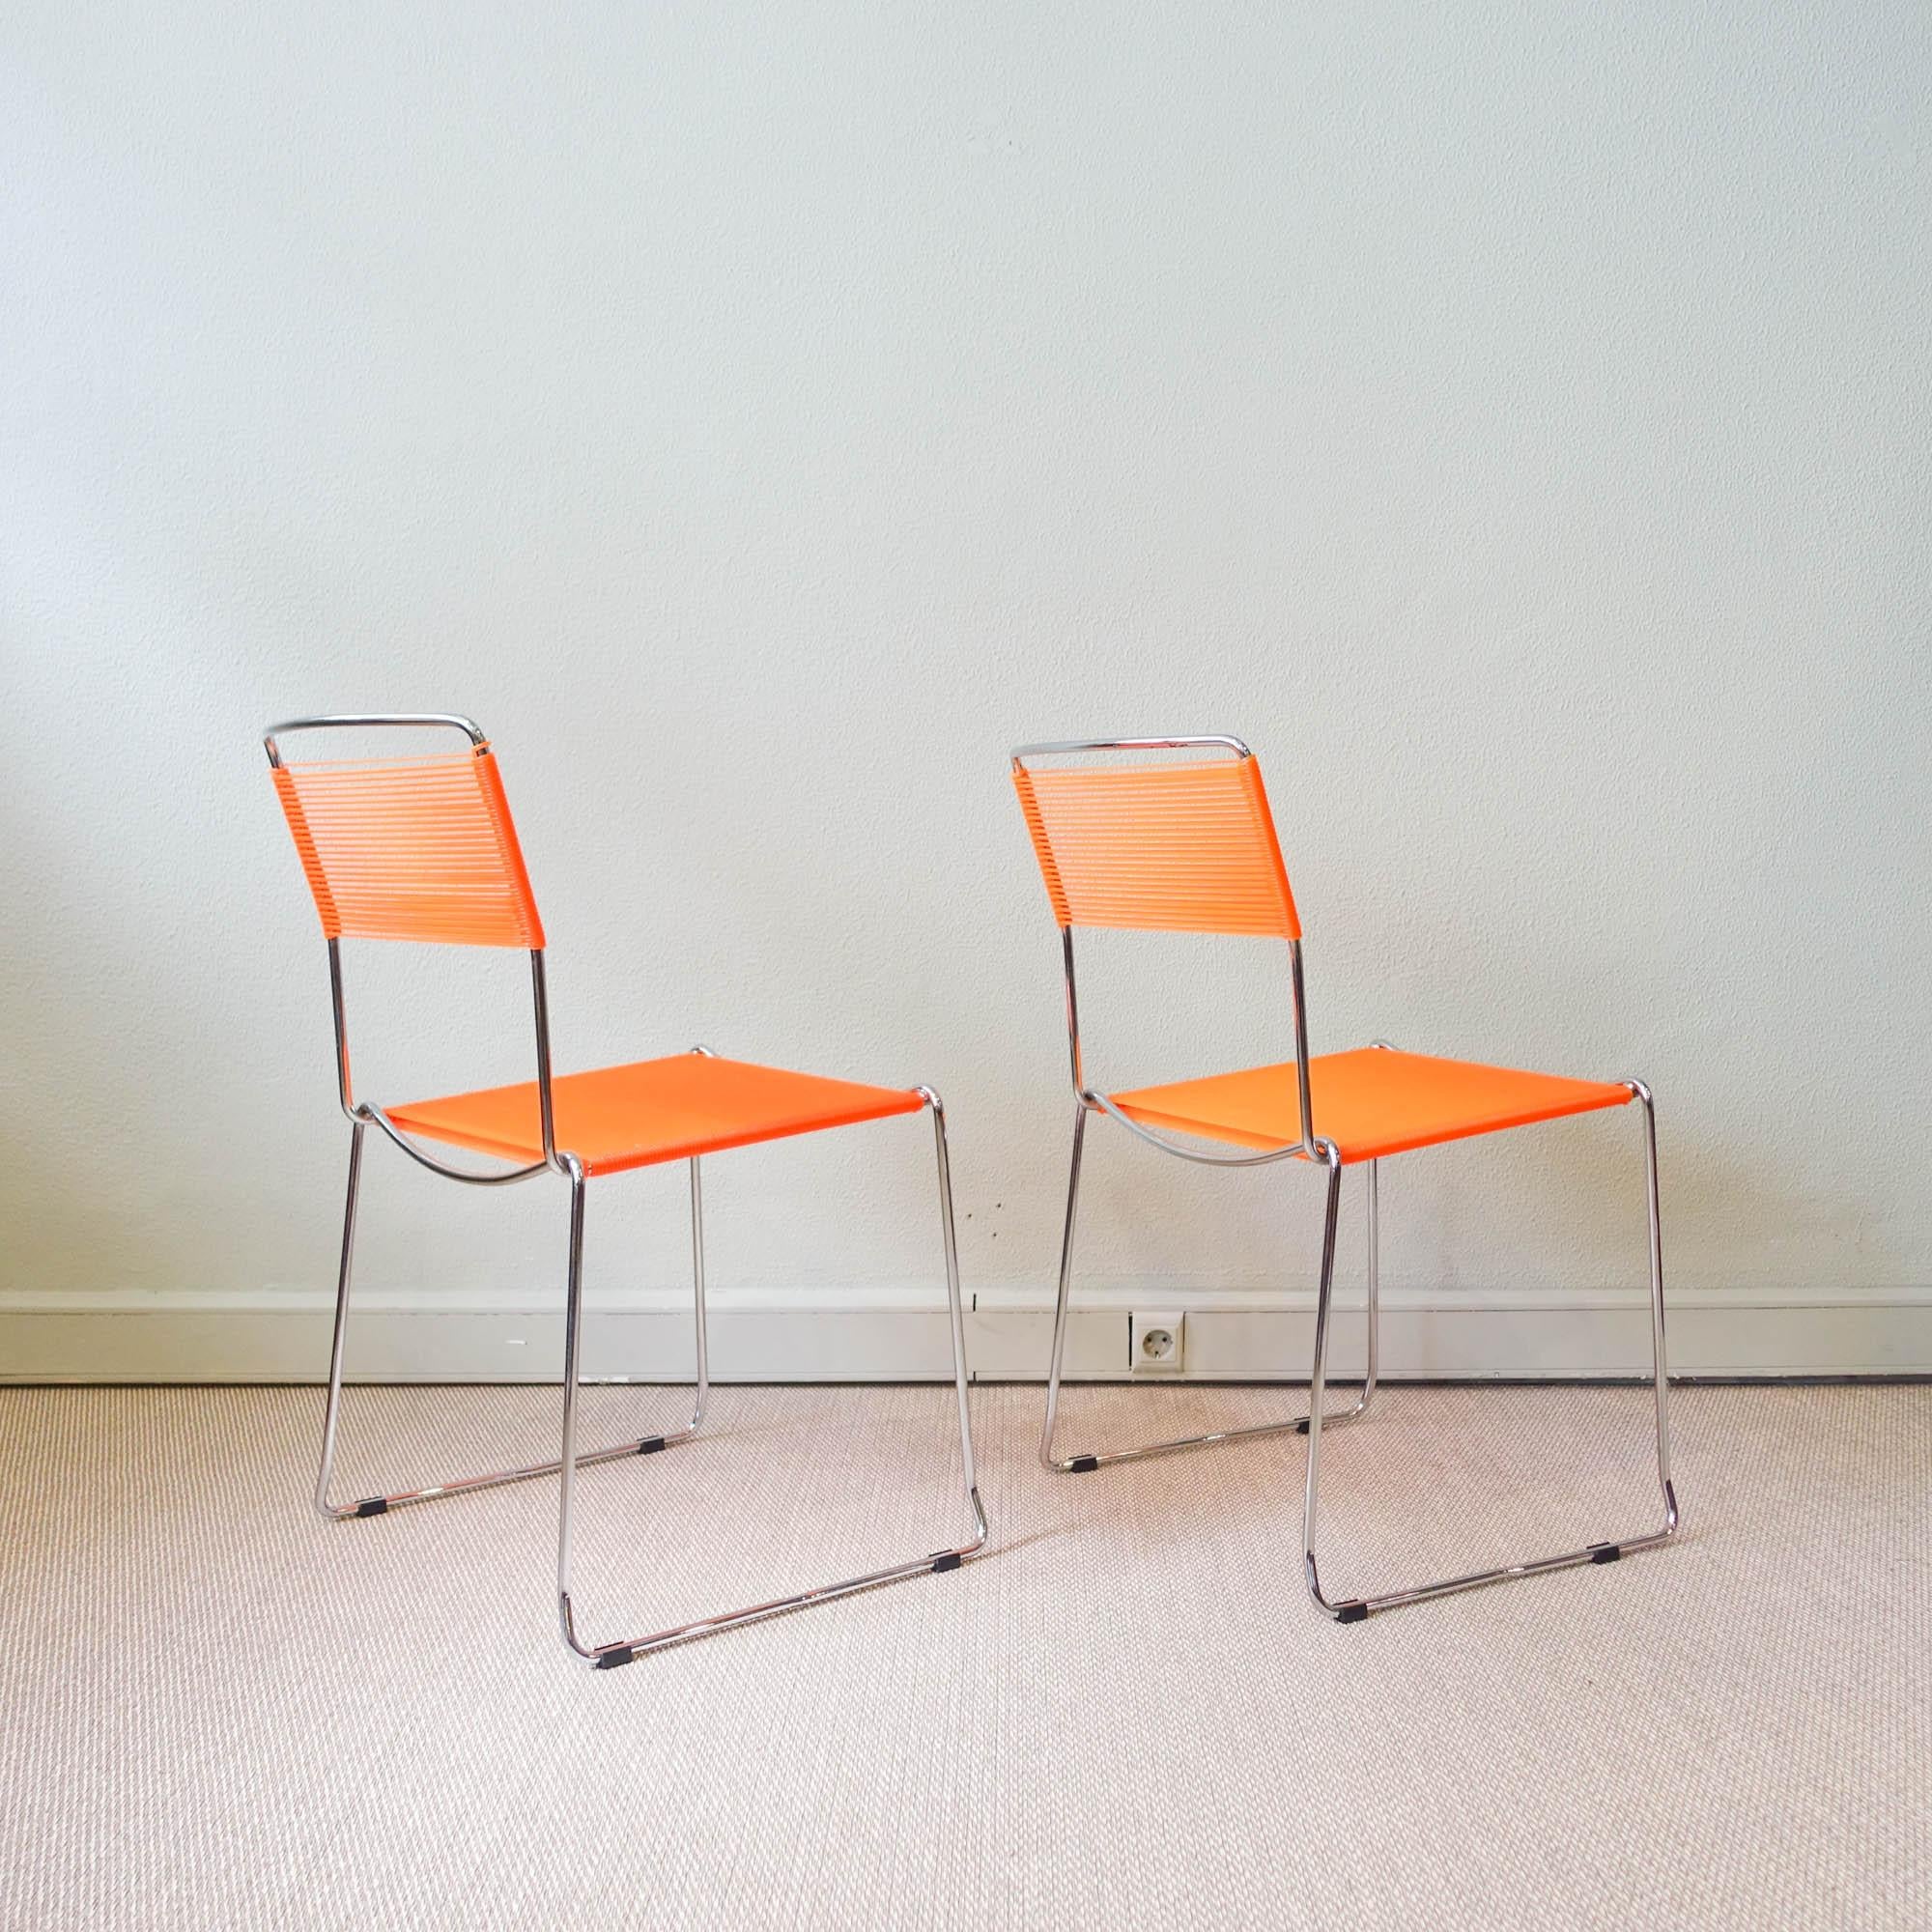 Pair of Orange Spaghetti Chairs by Giandomenico Belotti for Alias, 1980's For Sale 1